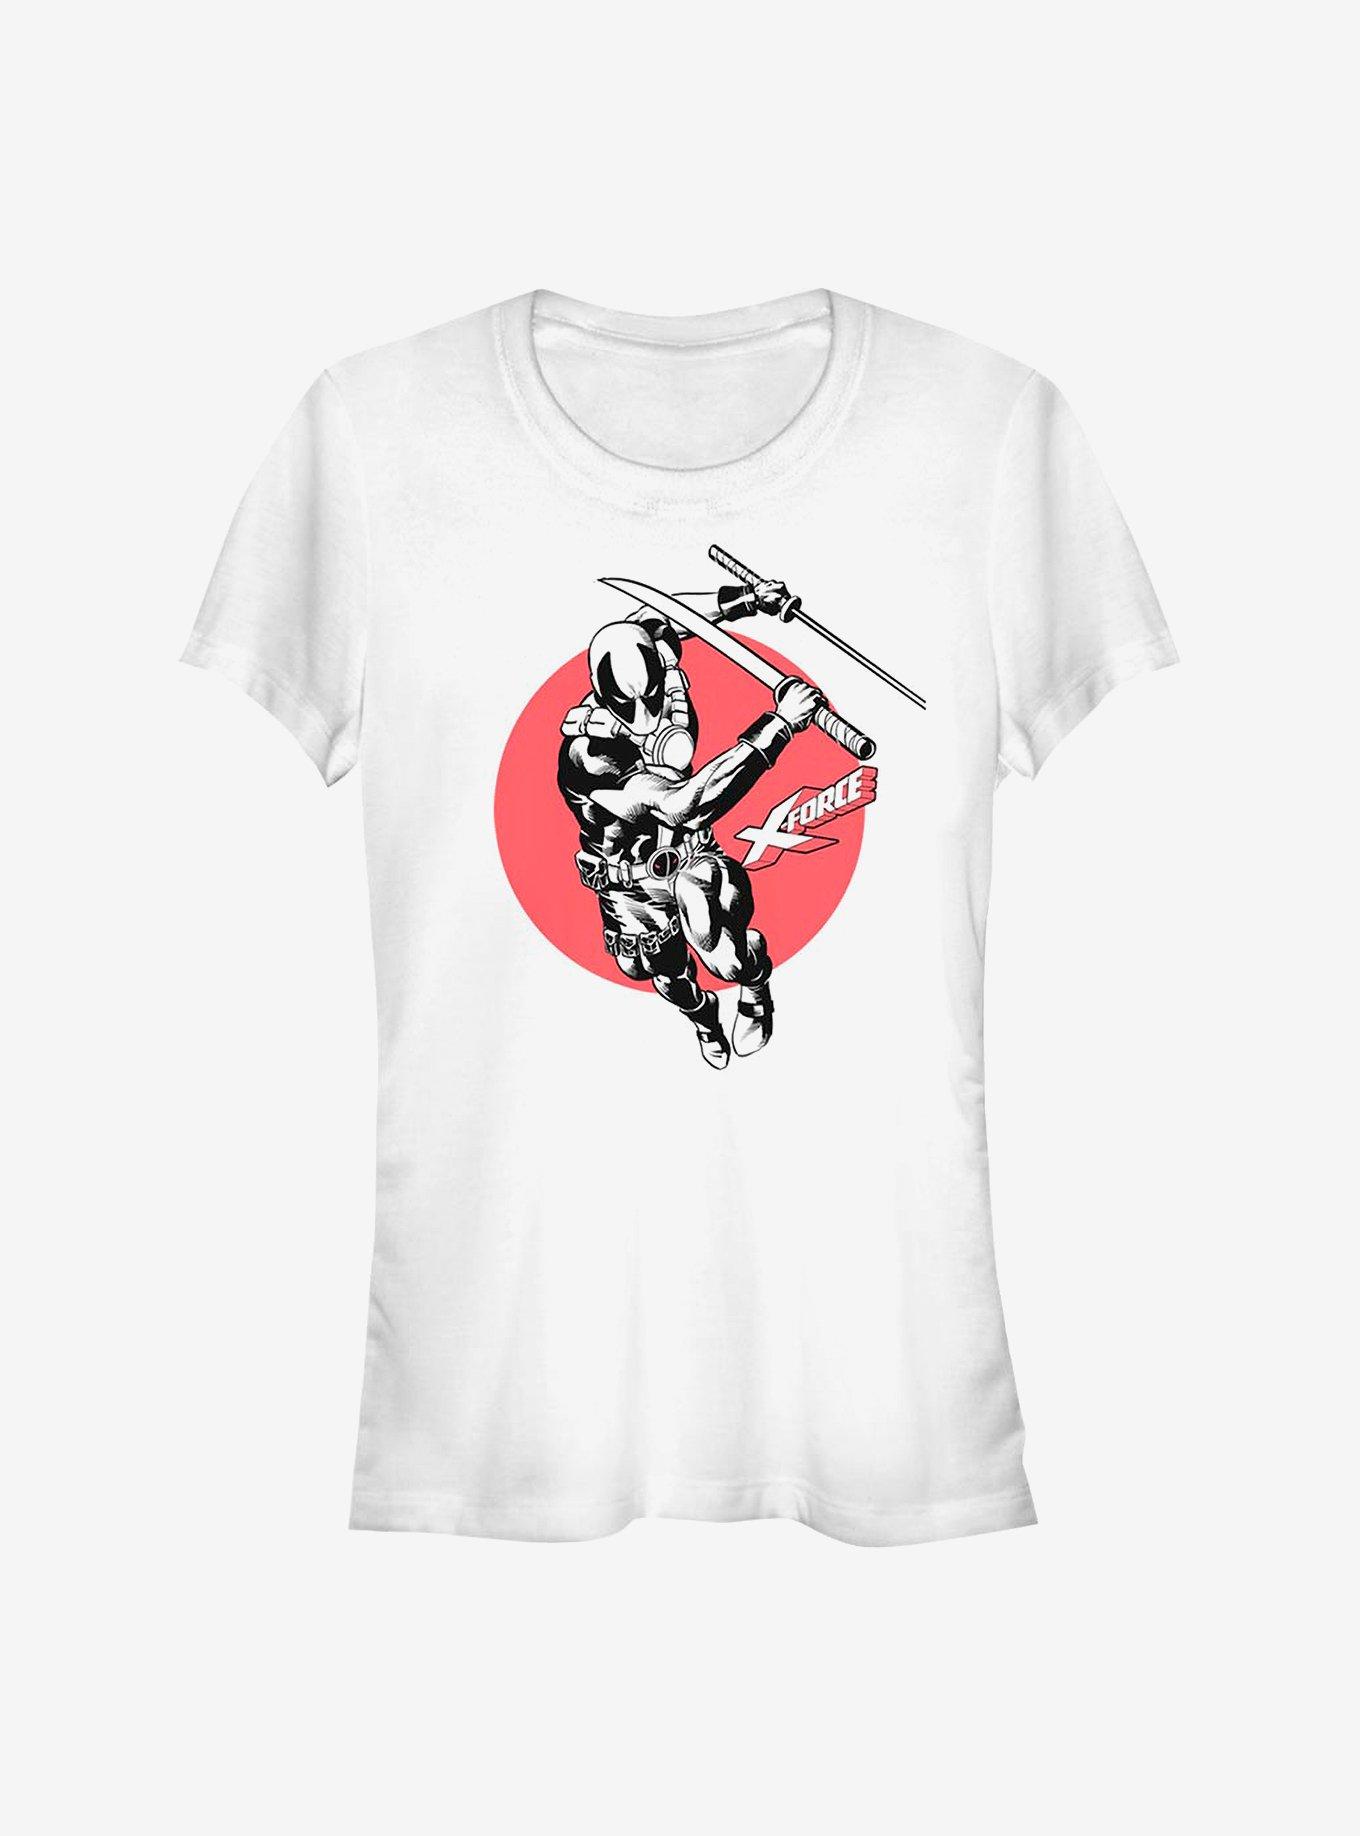 Marvel Deadpool Dead Force Girls T-Shirt, , hi-res